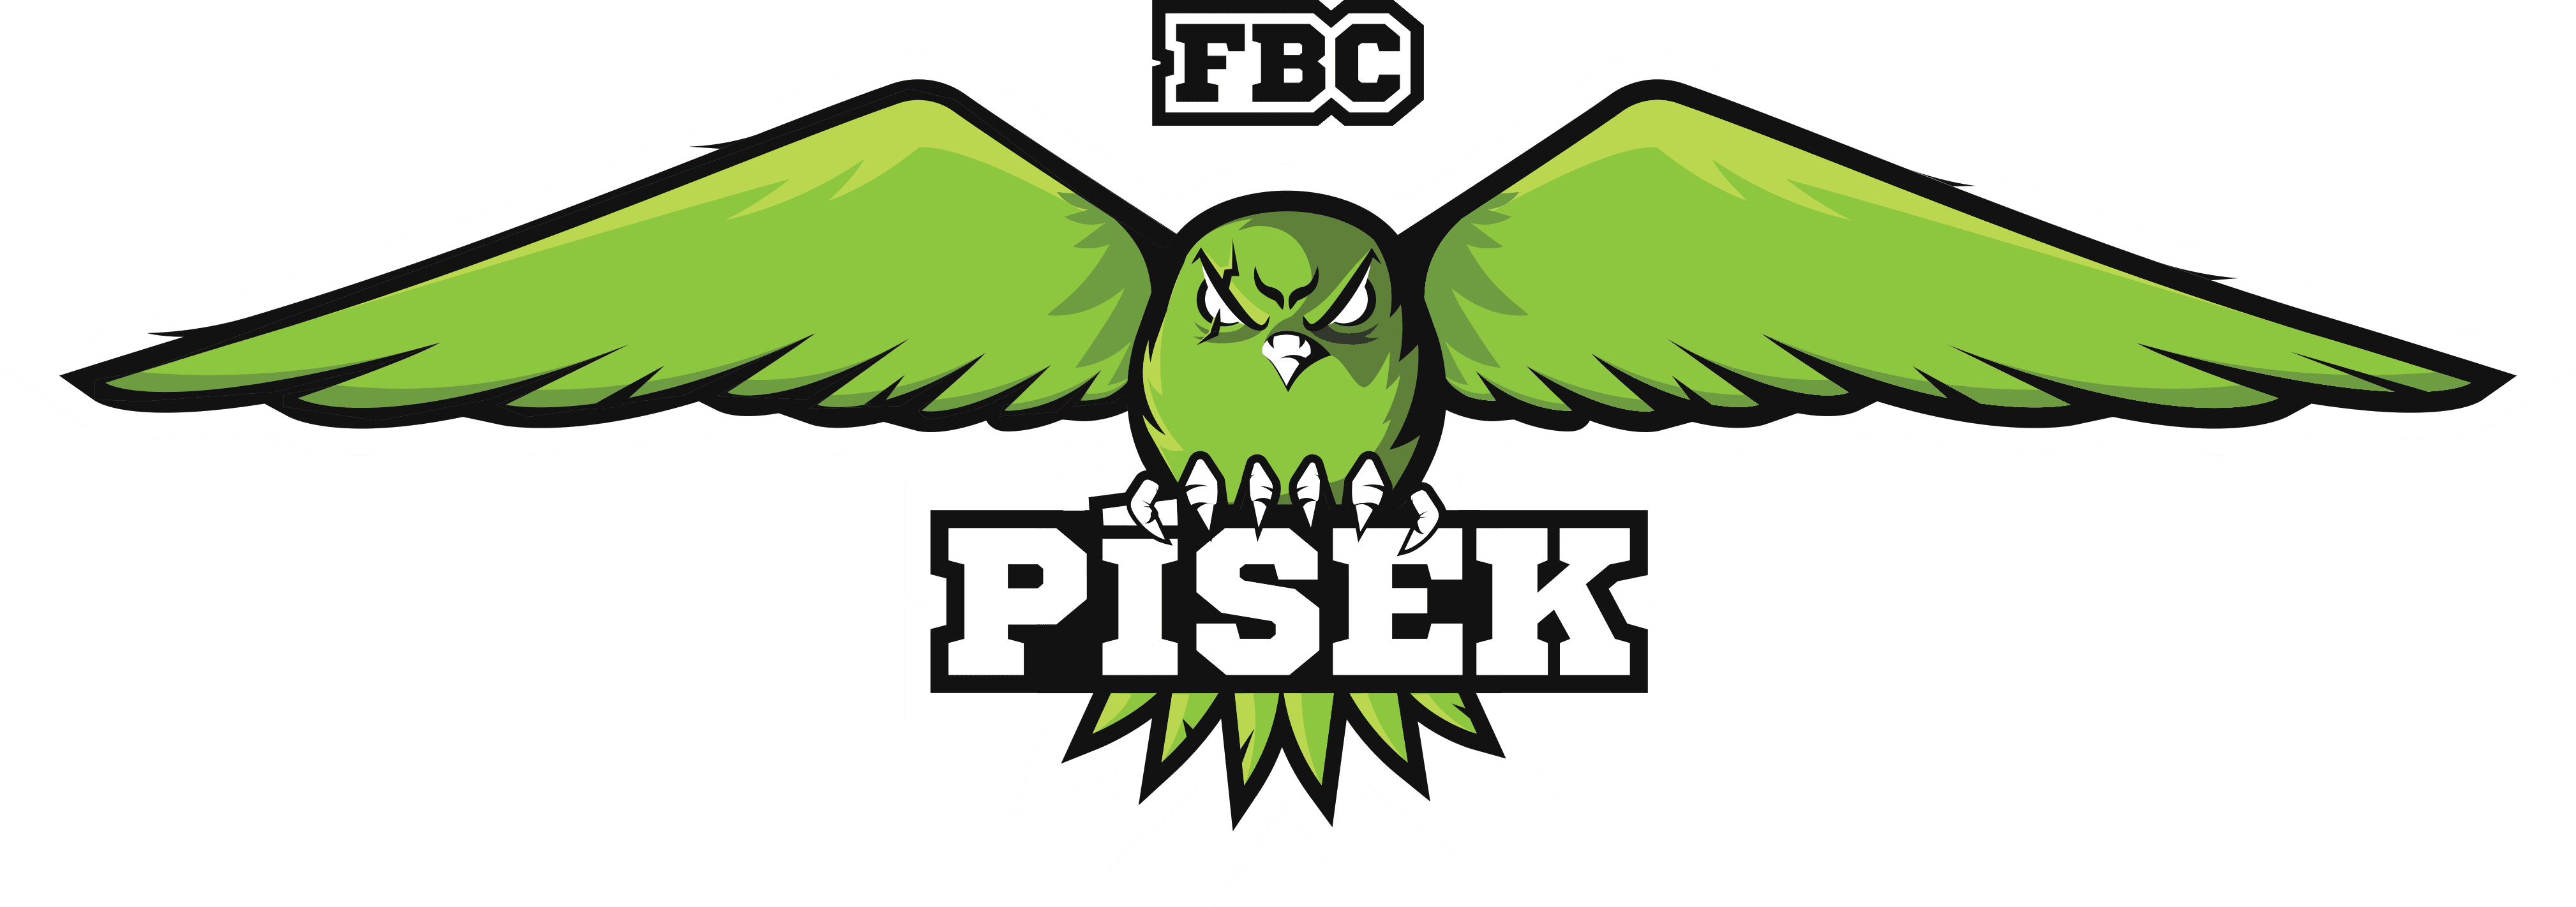 Floorball Club Písek